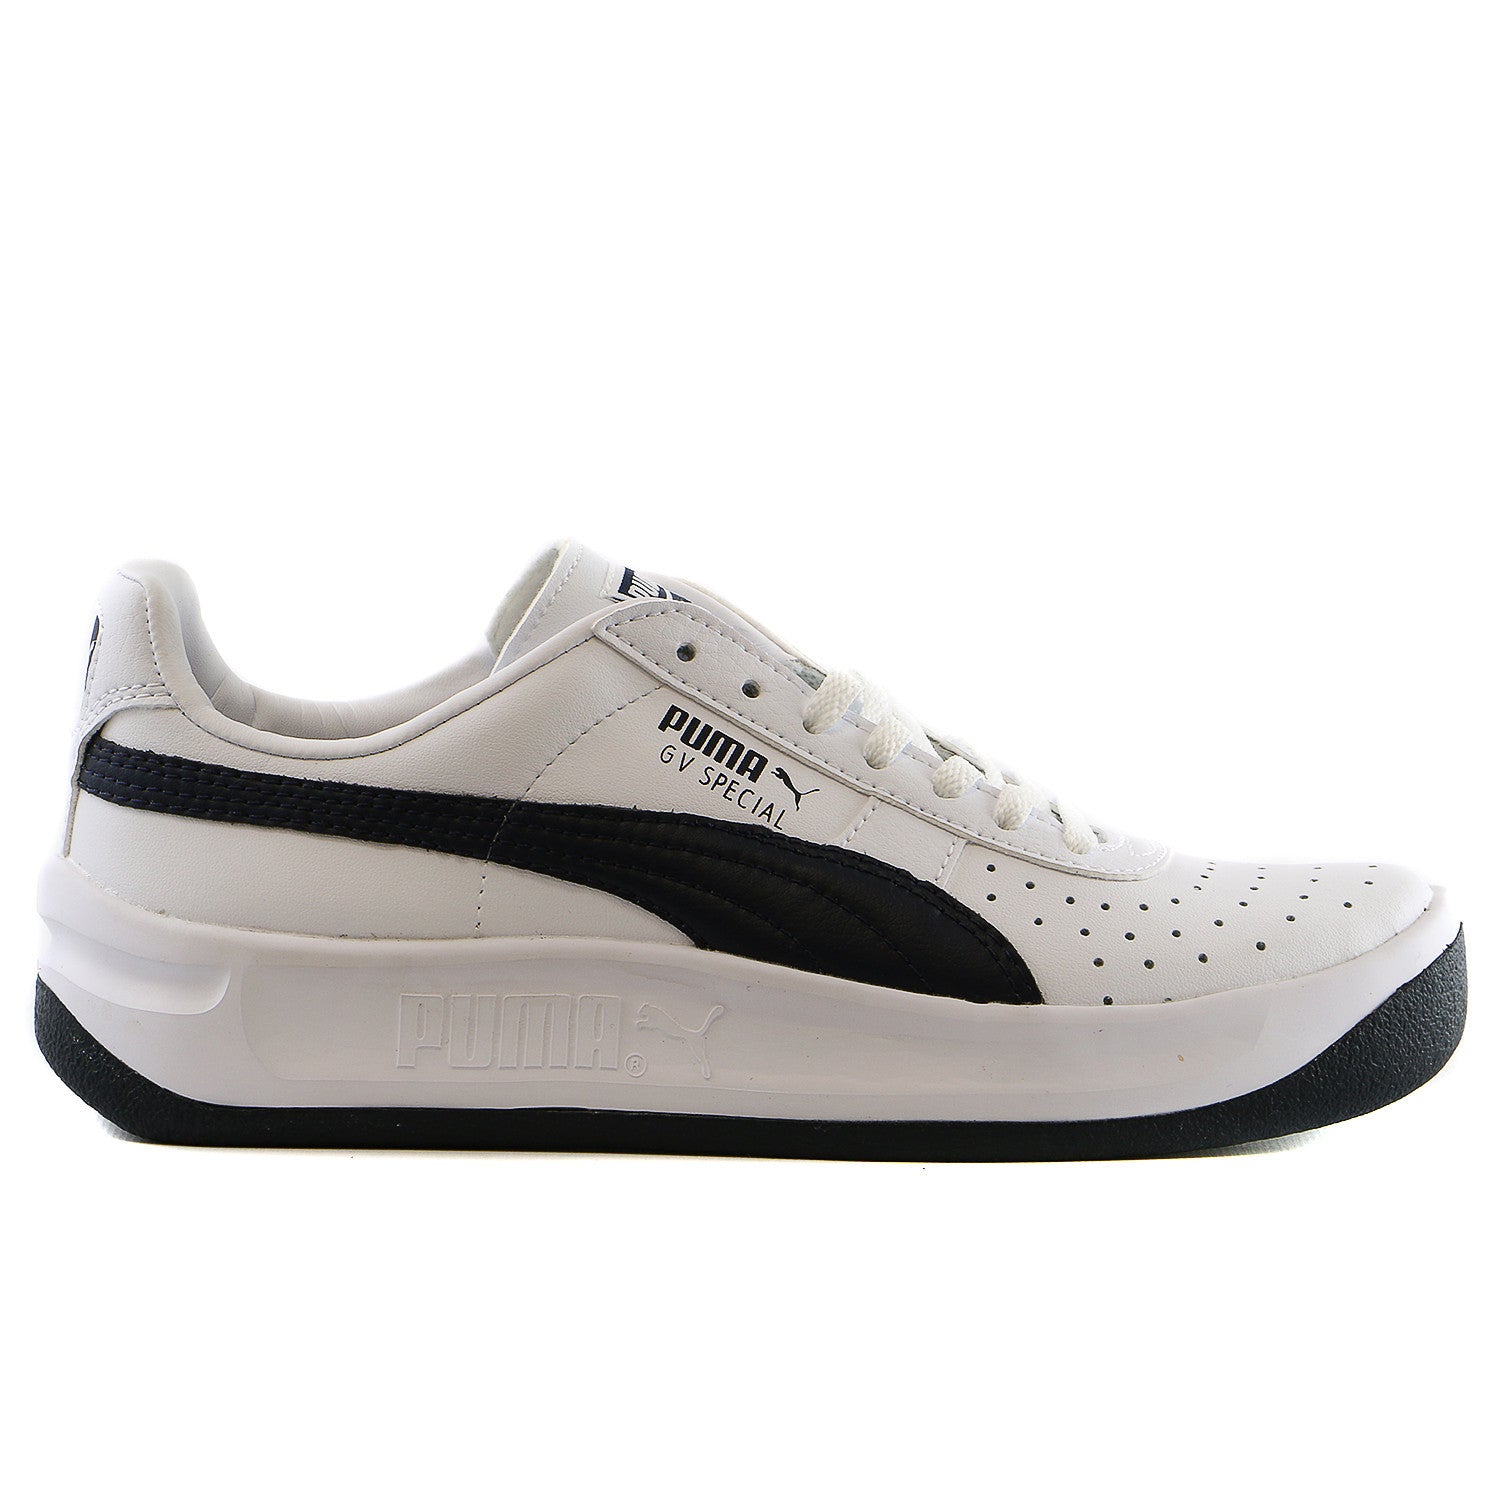 Puma GV Special Jr Shoes - White/New Navy - Boys - Shoplifestyle